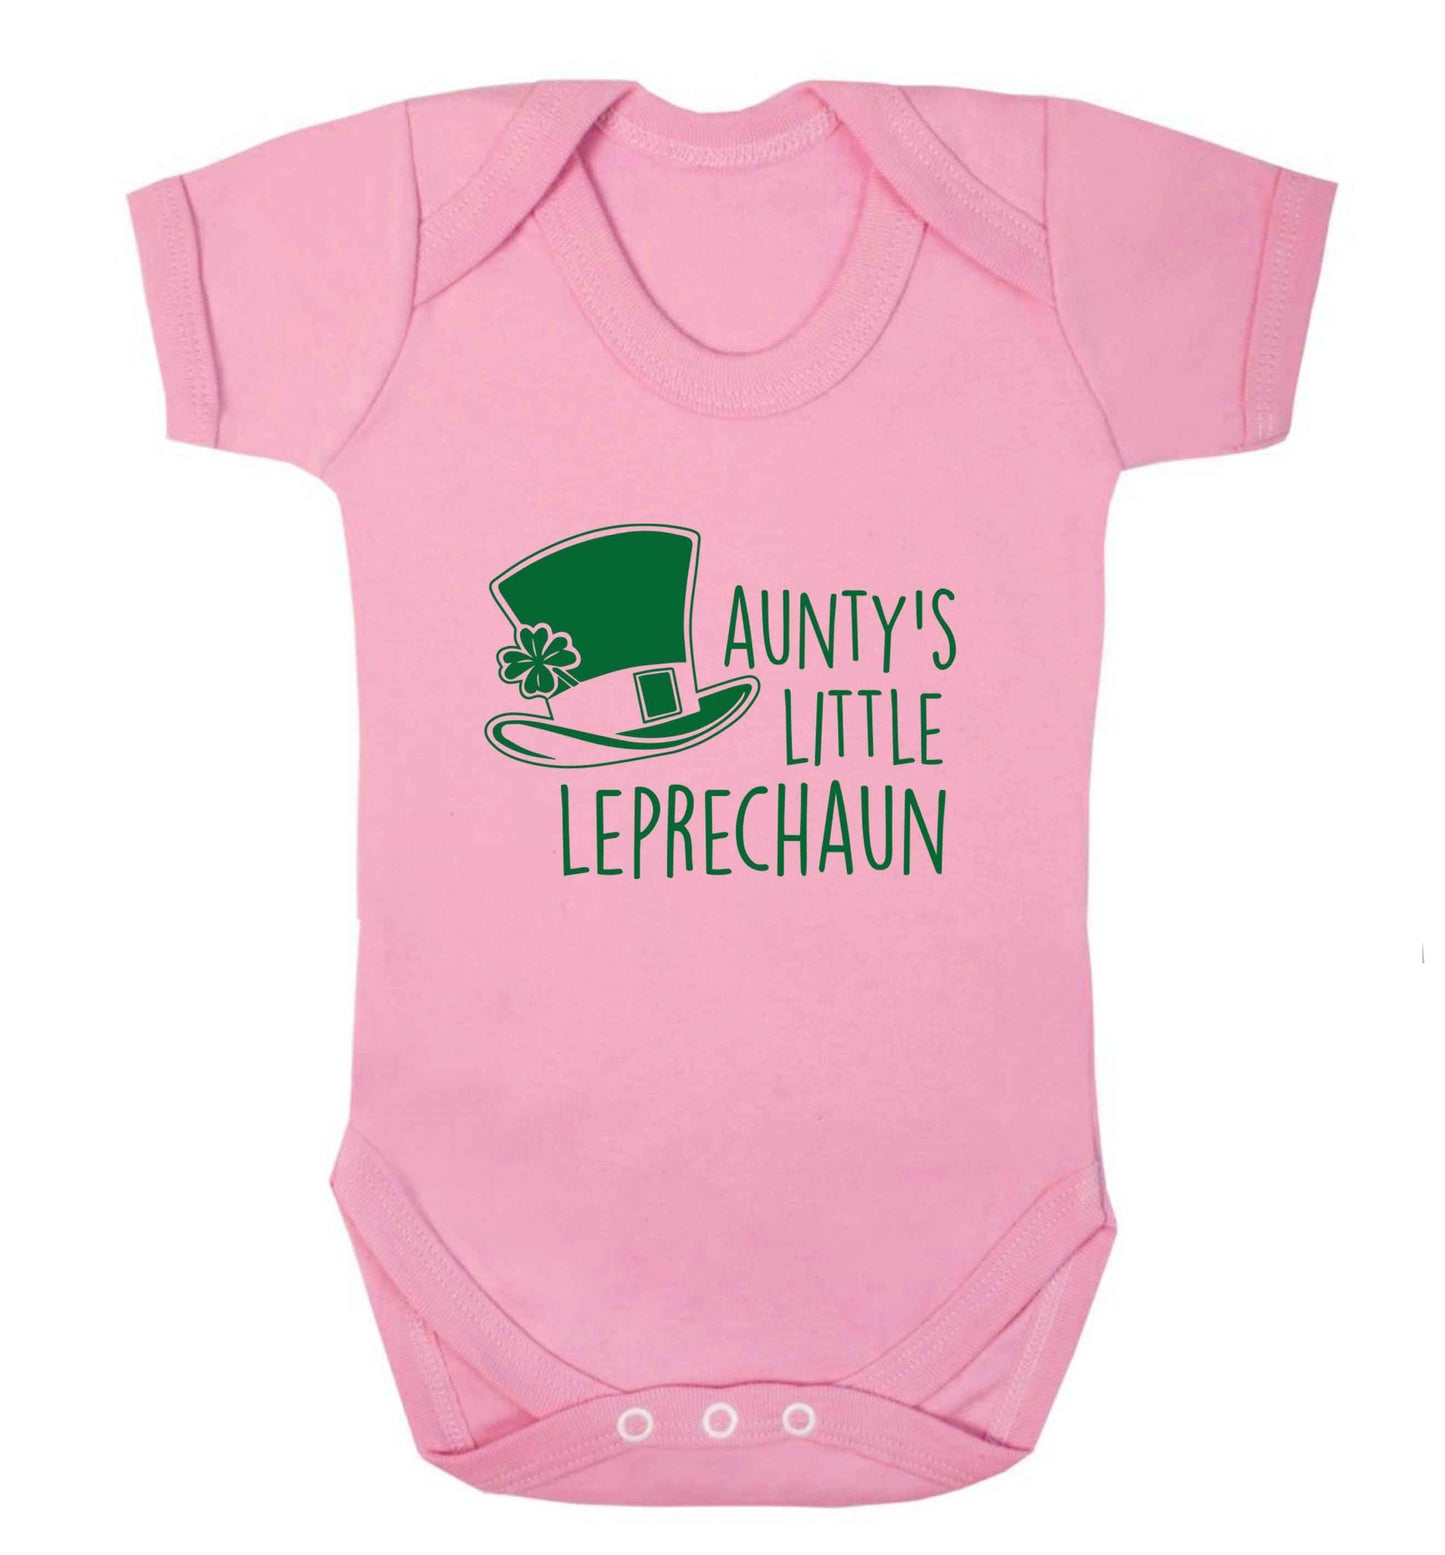 Aunty's little leprechaun baby vest pale pink 18-24 months